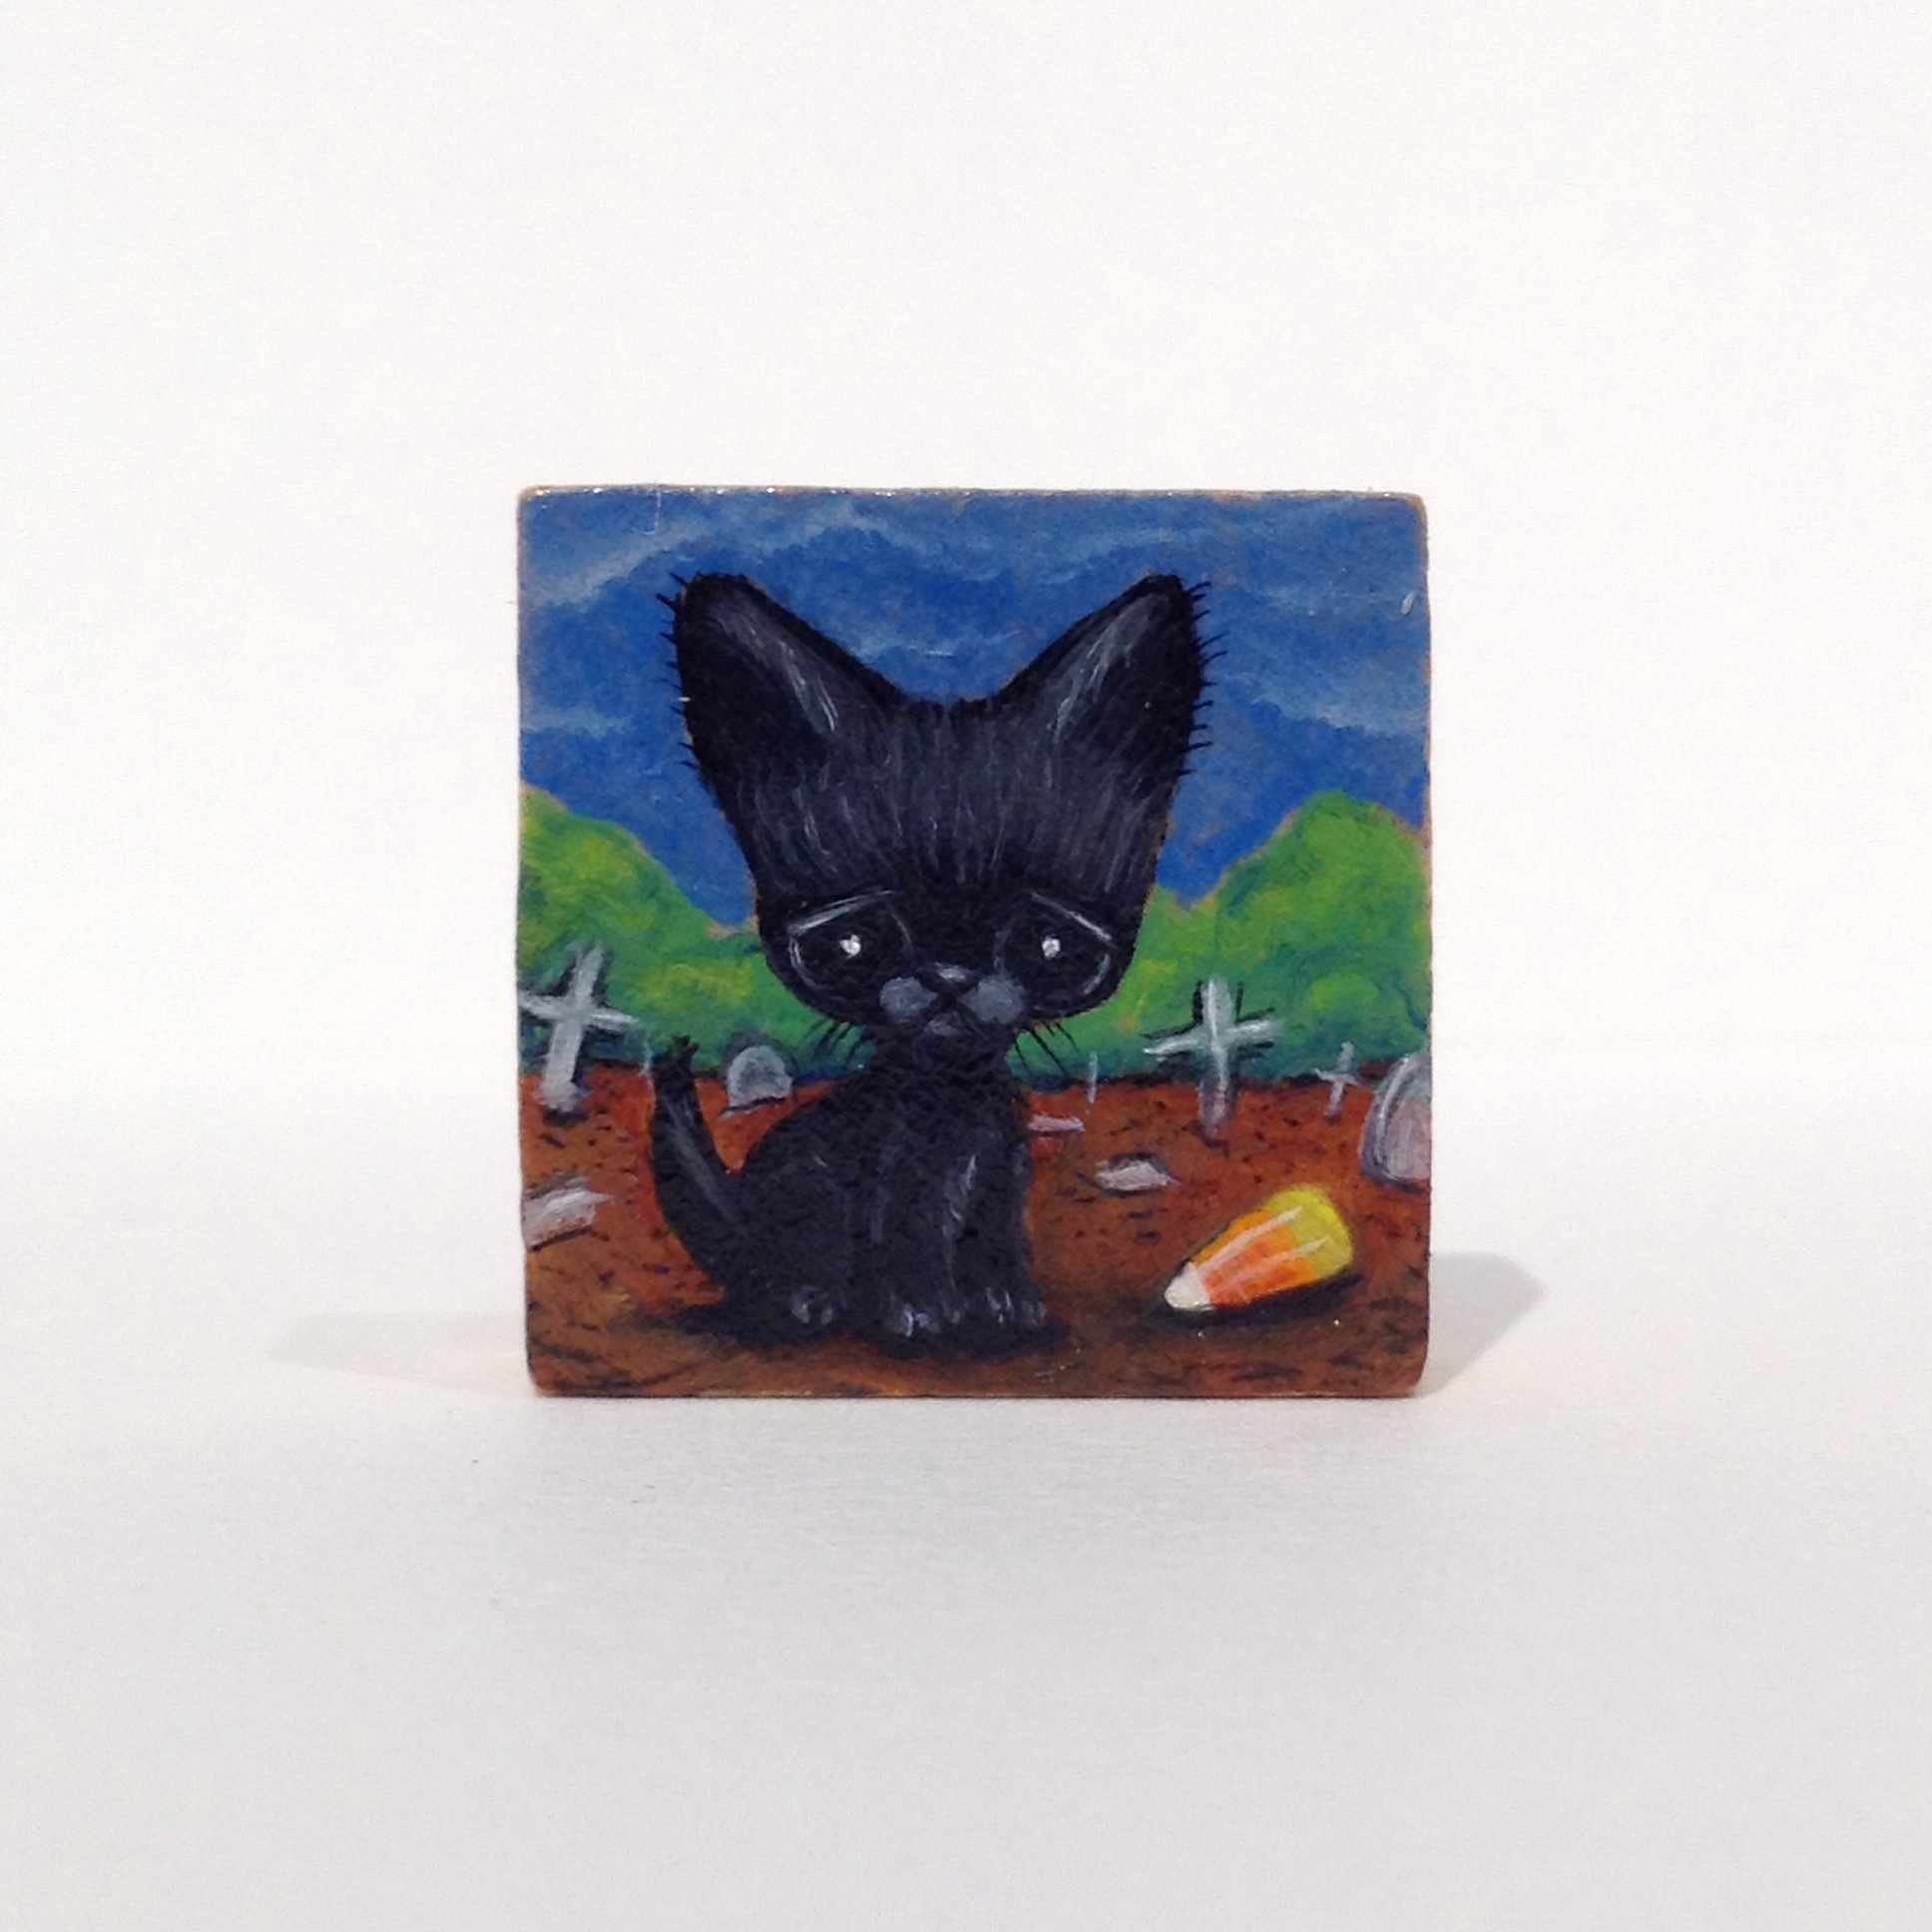 Siamese Cat Eye Miniature Original Oil Painting On Scrabble Tile Art Sugar Fueled